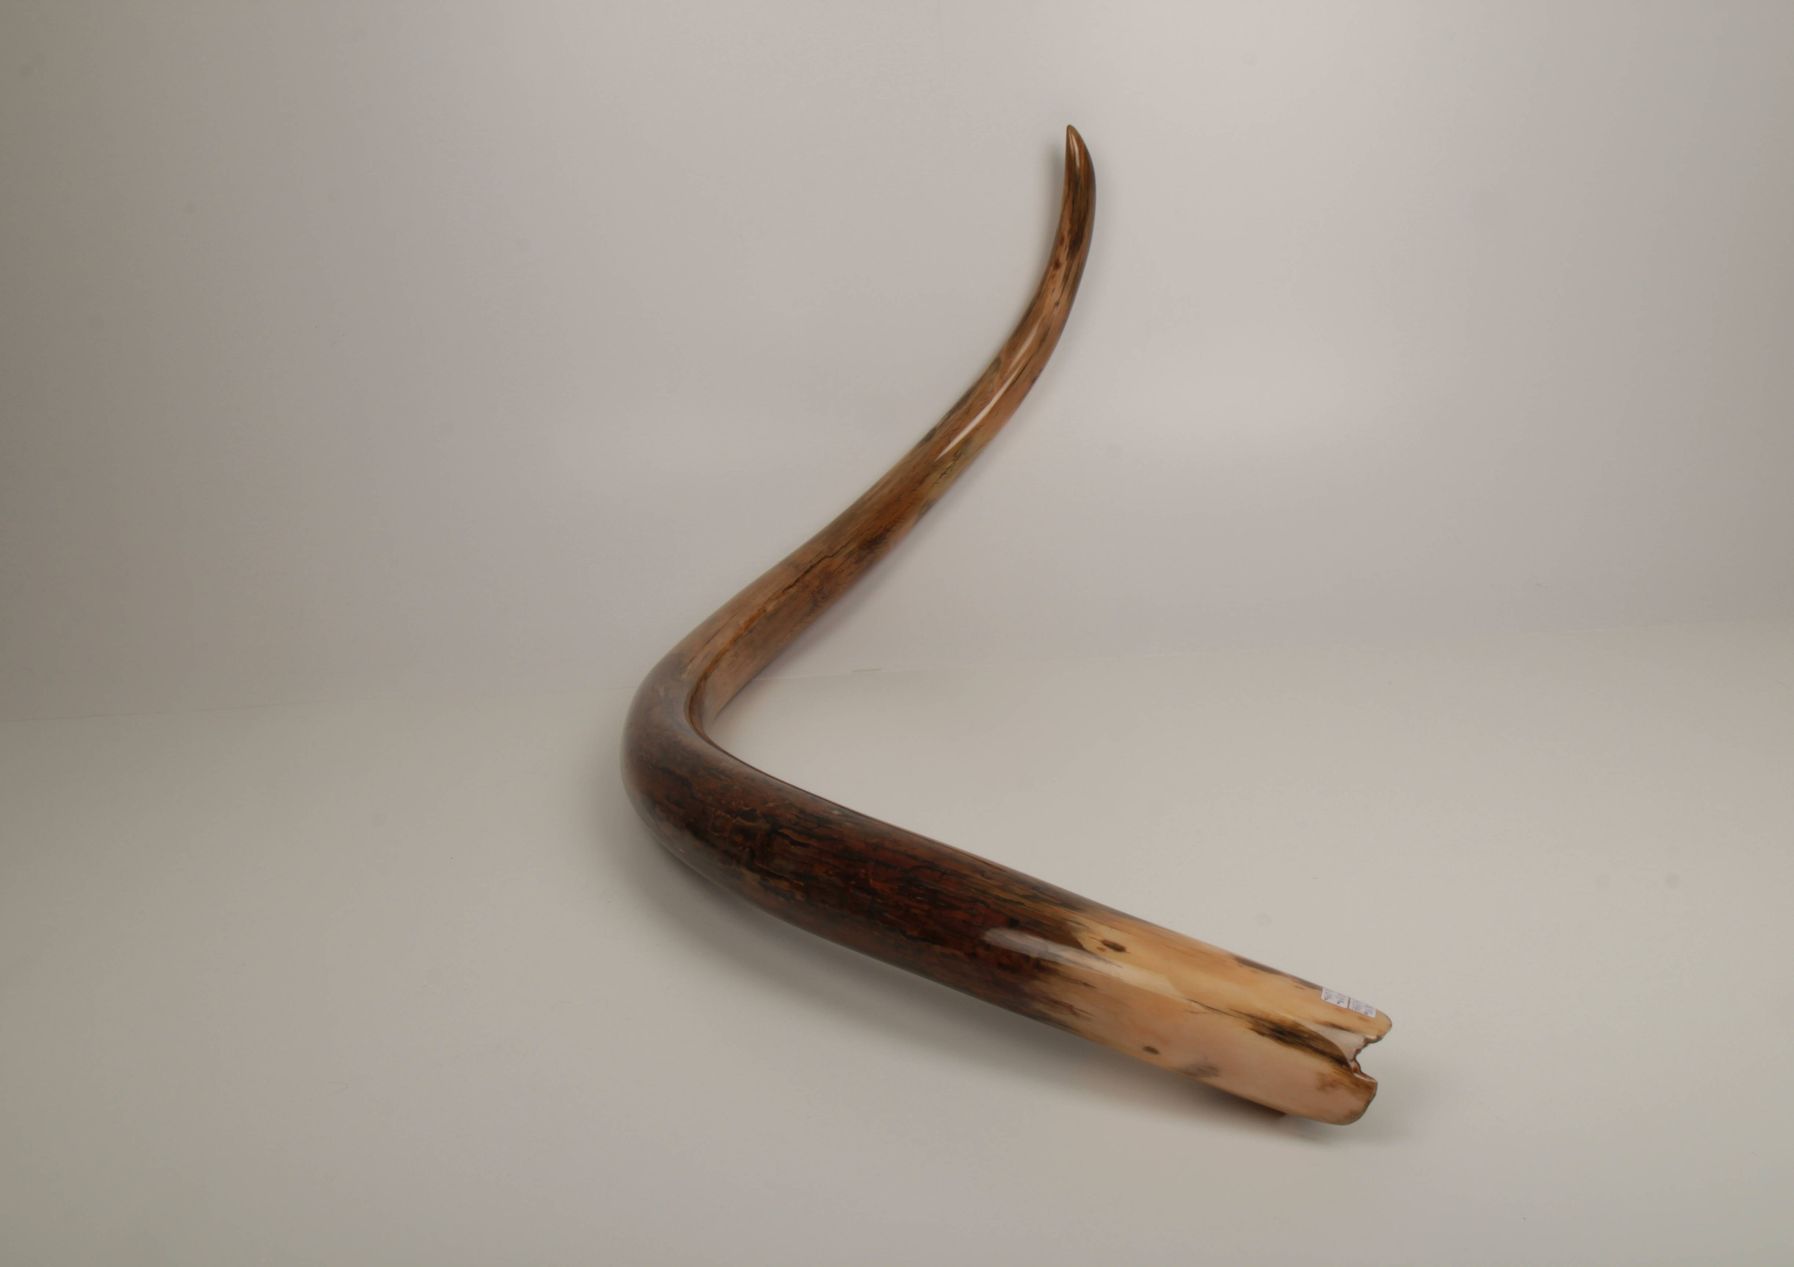 Restored woolly mammoth tusk